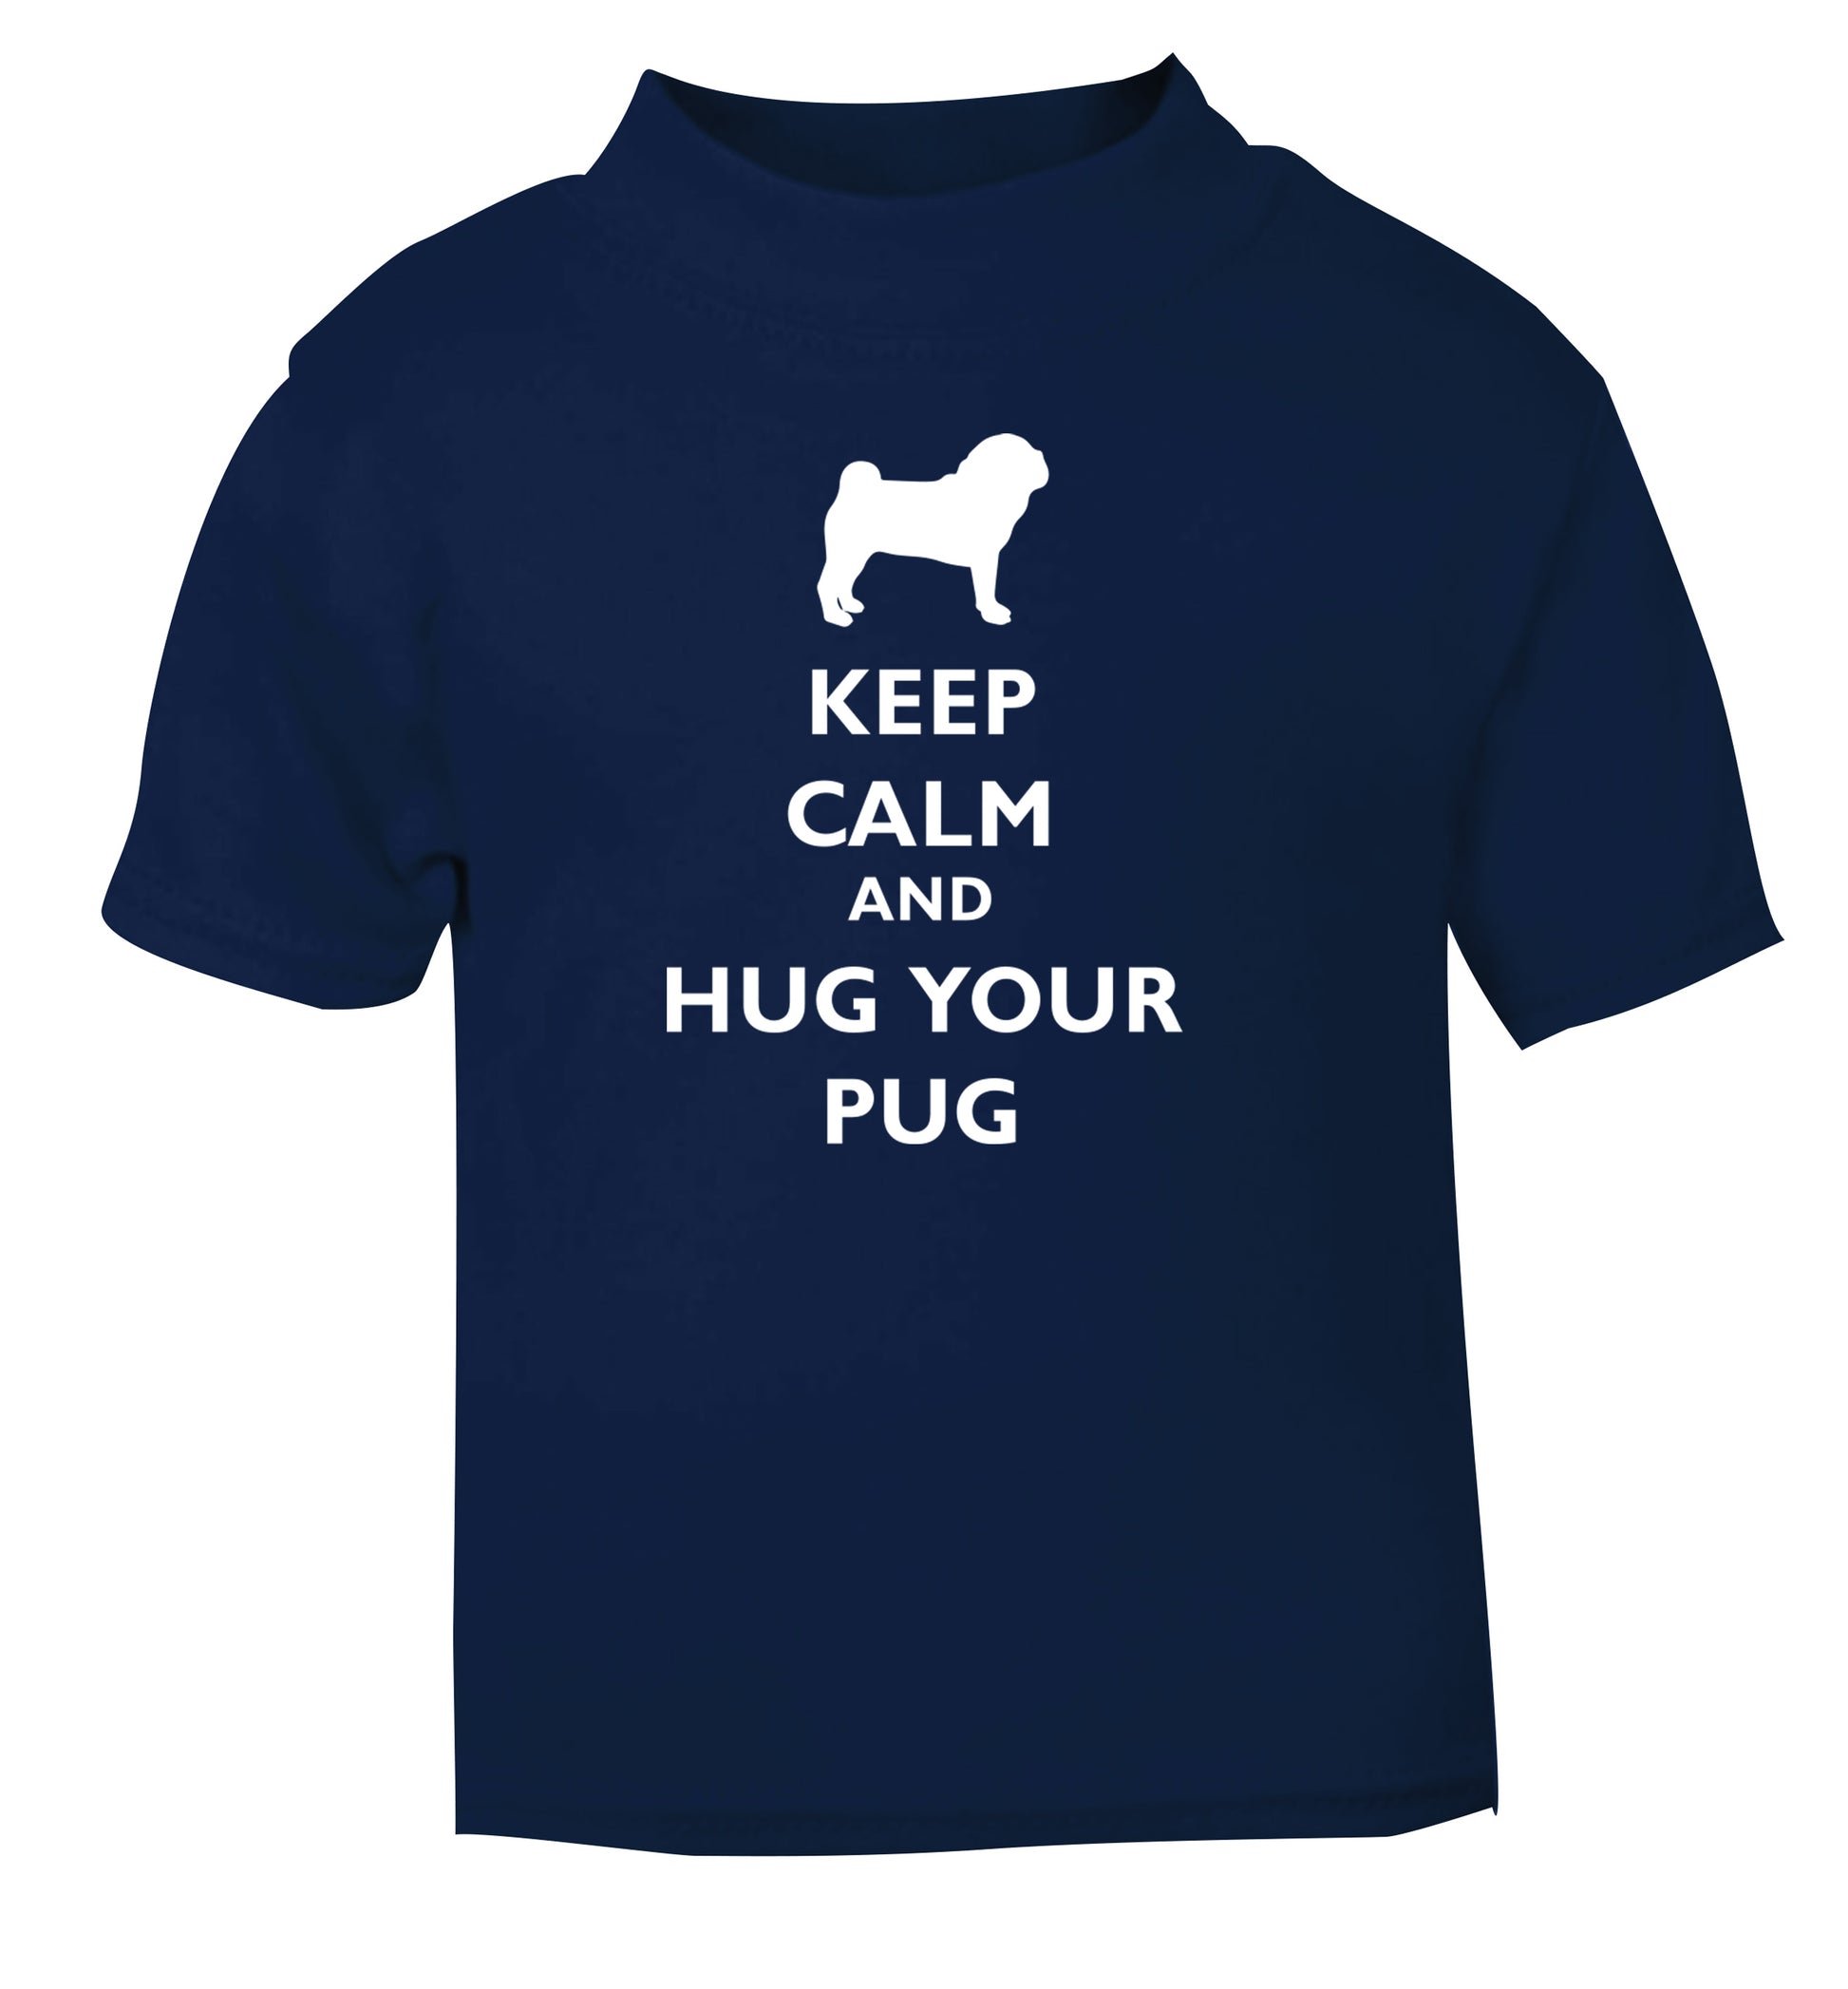 Keep calm and hug your pug navy Baby Toddler Tshirt 2 Years